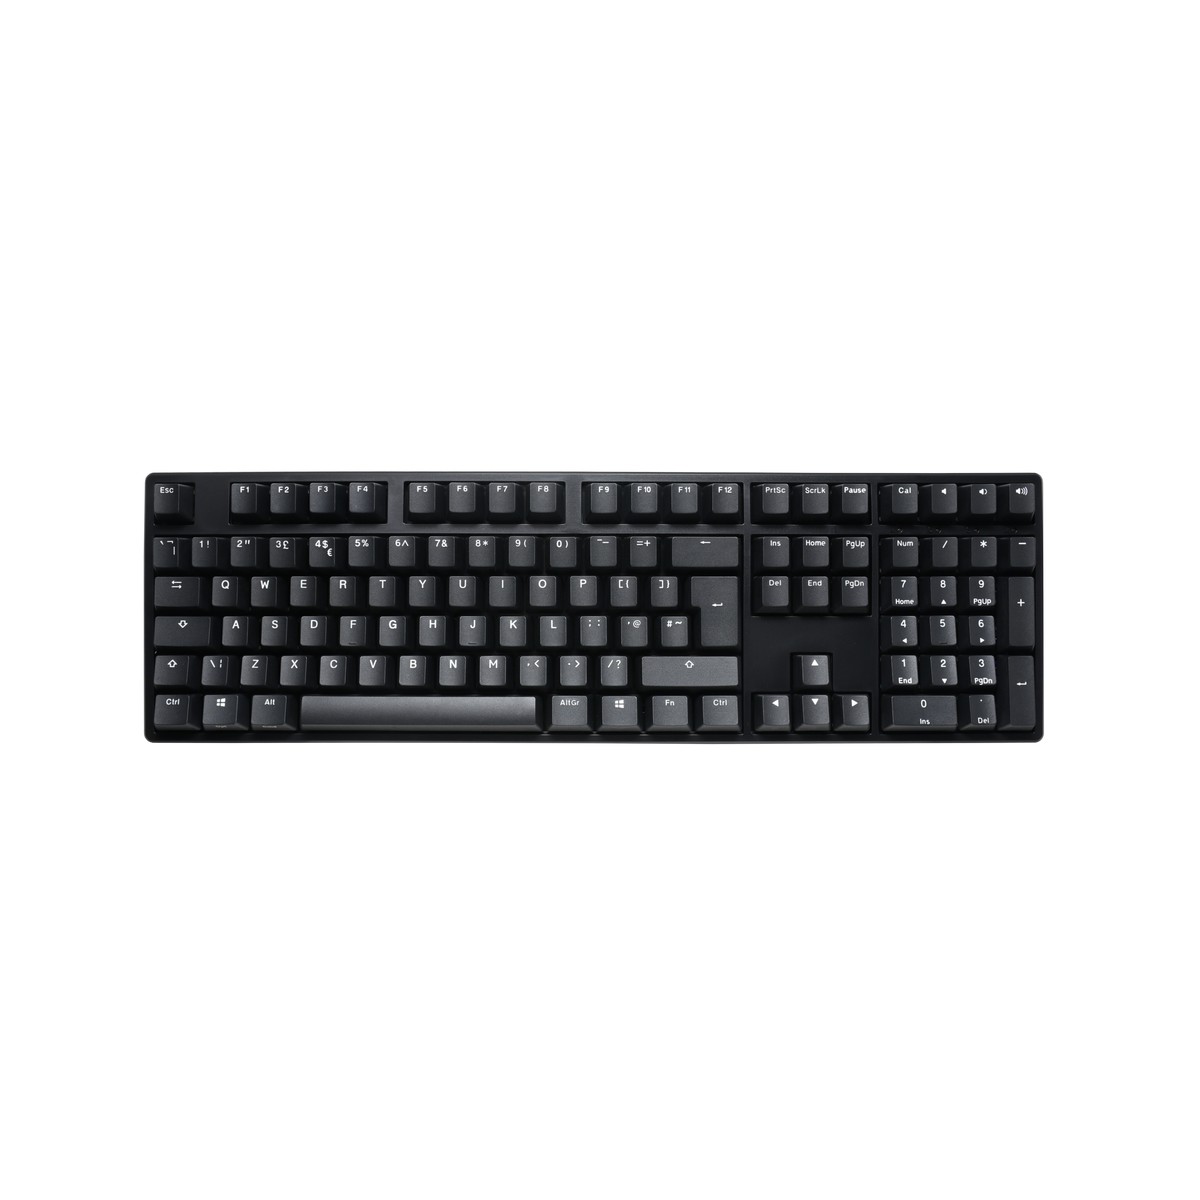 B Grade Ducky Origin USB Mechanical Gaming Keyboard Cherry MX Blue - Black UK Layout